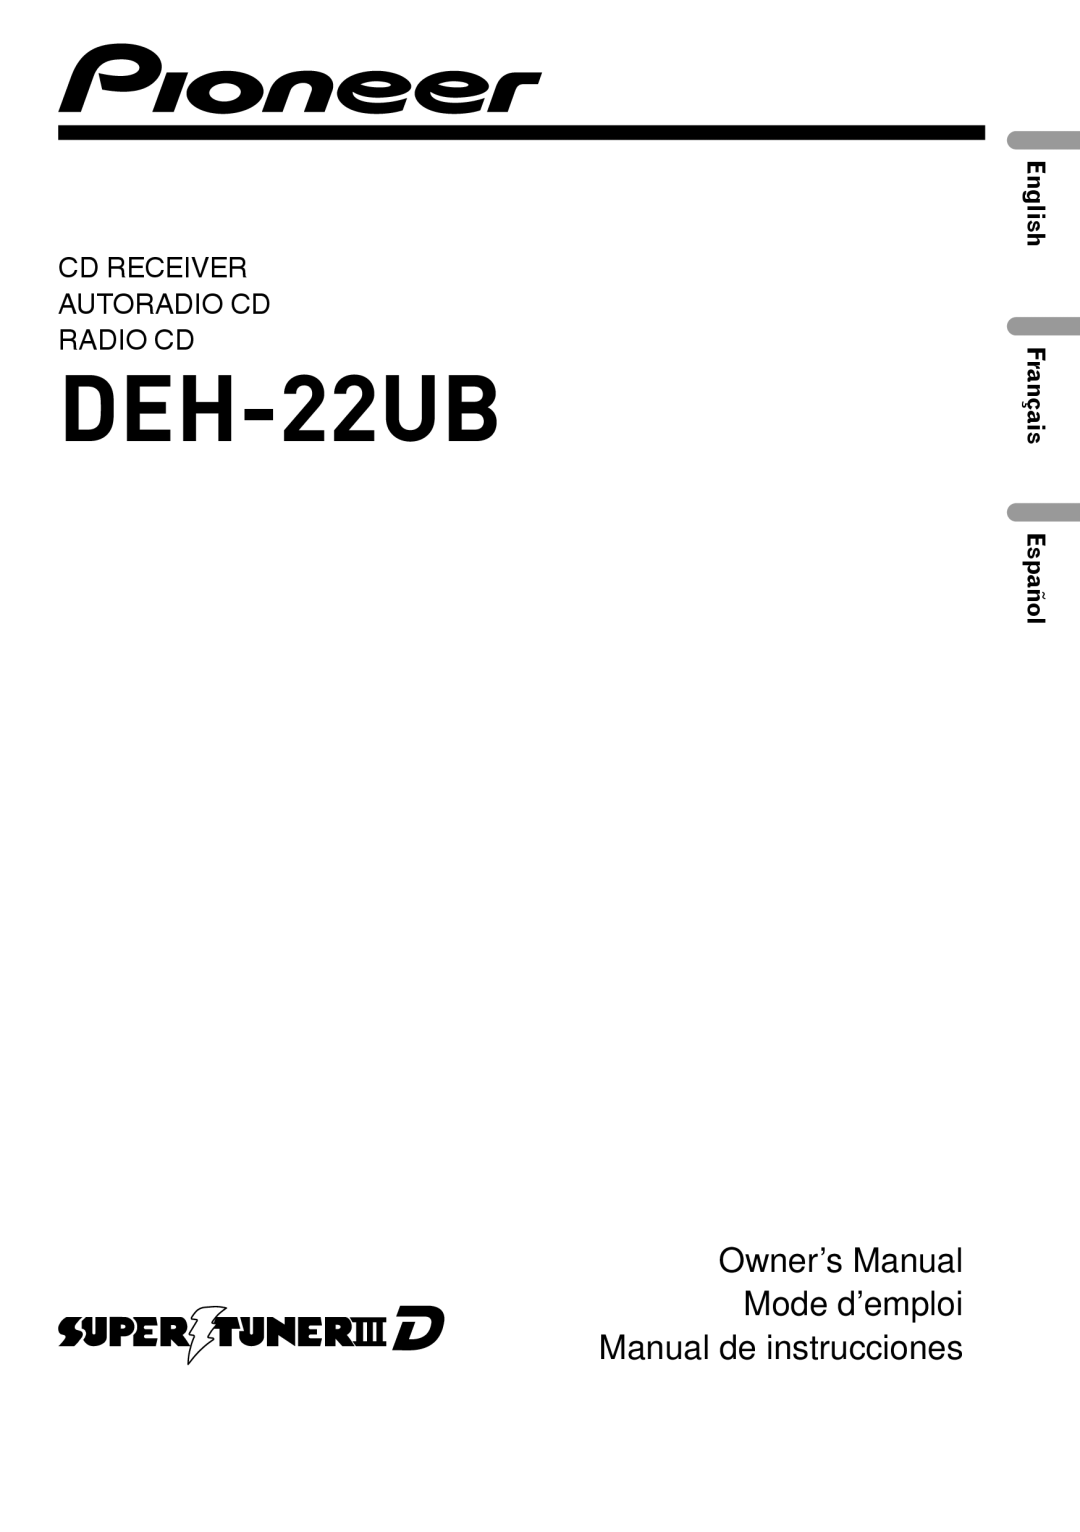 Pioneer DEH-22UB owner manual Cd Receiver Autoradio Cd Radio Cd, English Français Español 